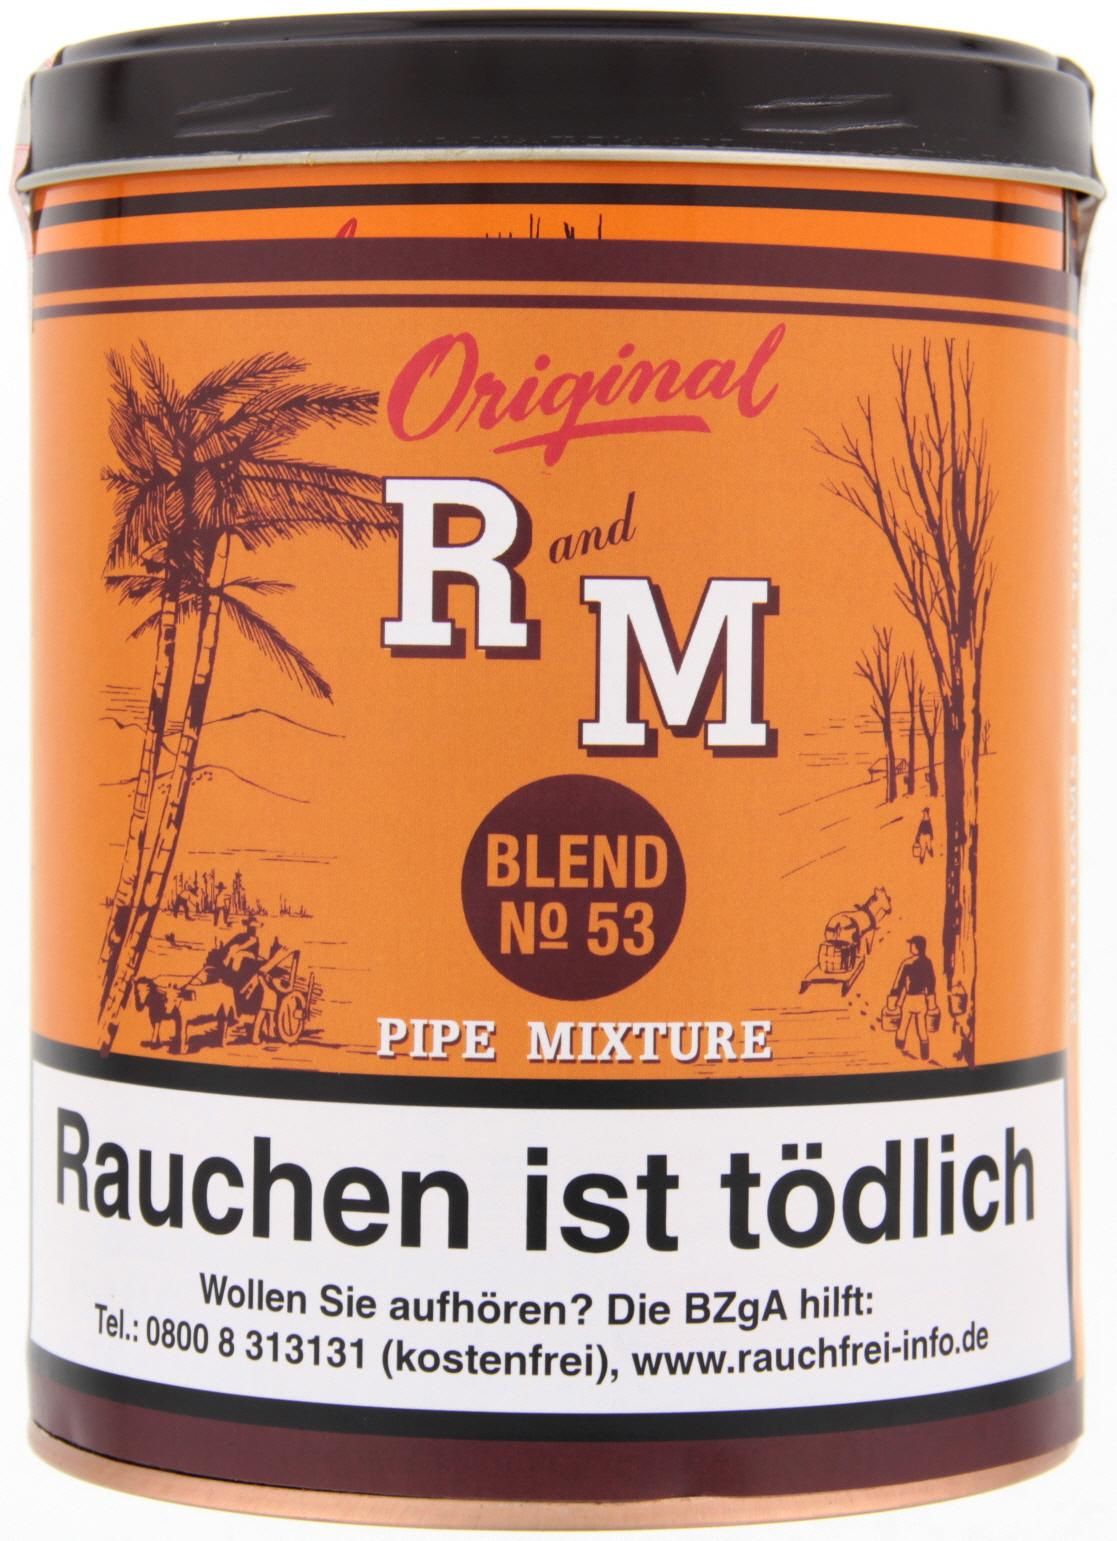 R and M Blend No53 (Rum&Maple) Tabak 250g Dose (Pfeifentabak)